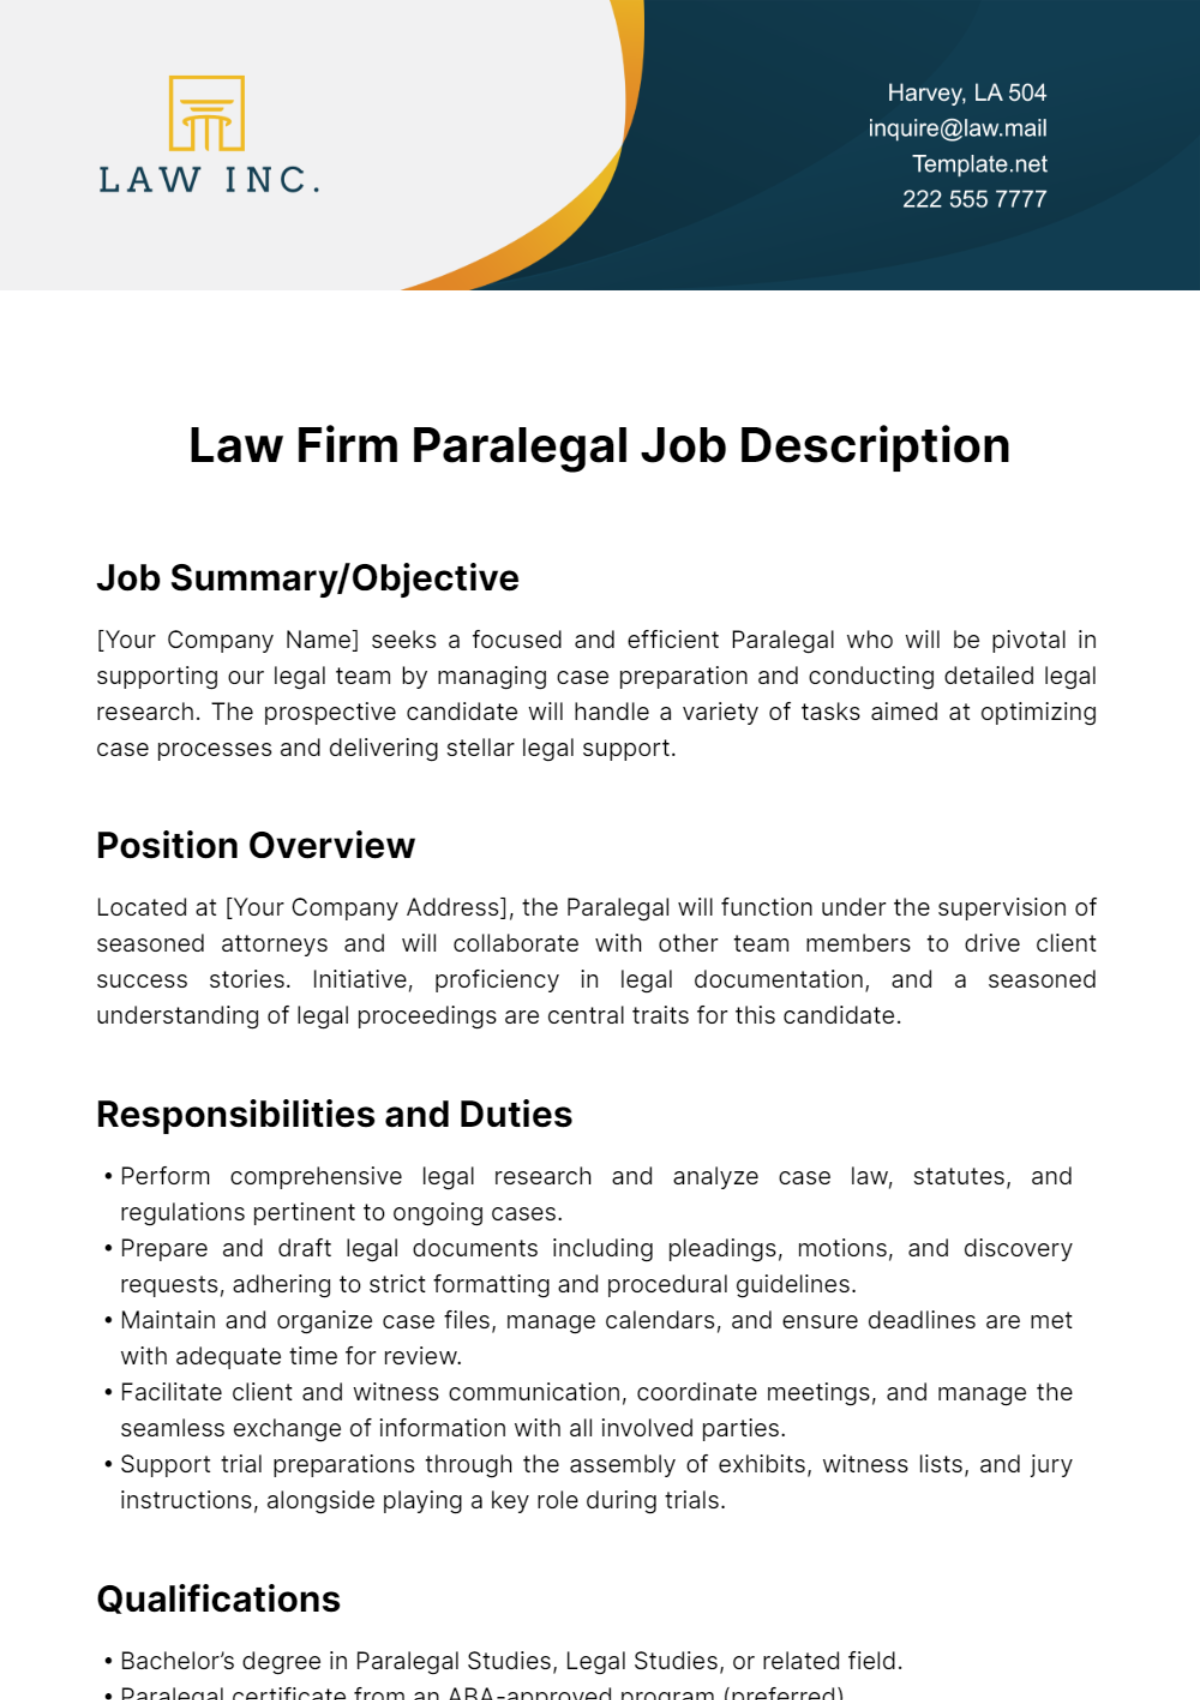 Free Law Firm Paralegal Job Description Template